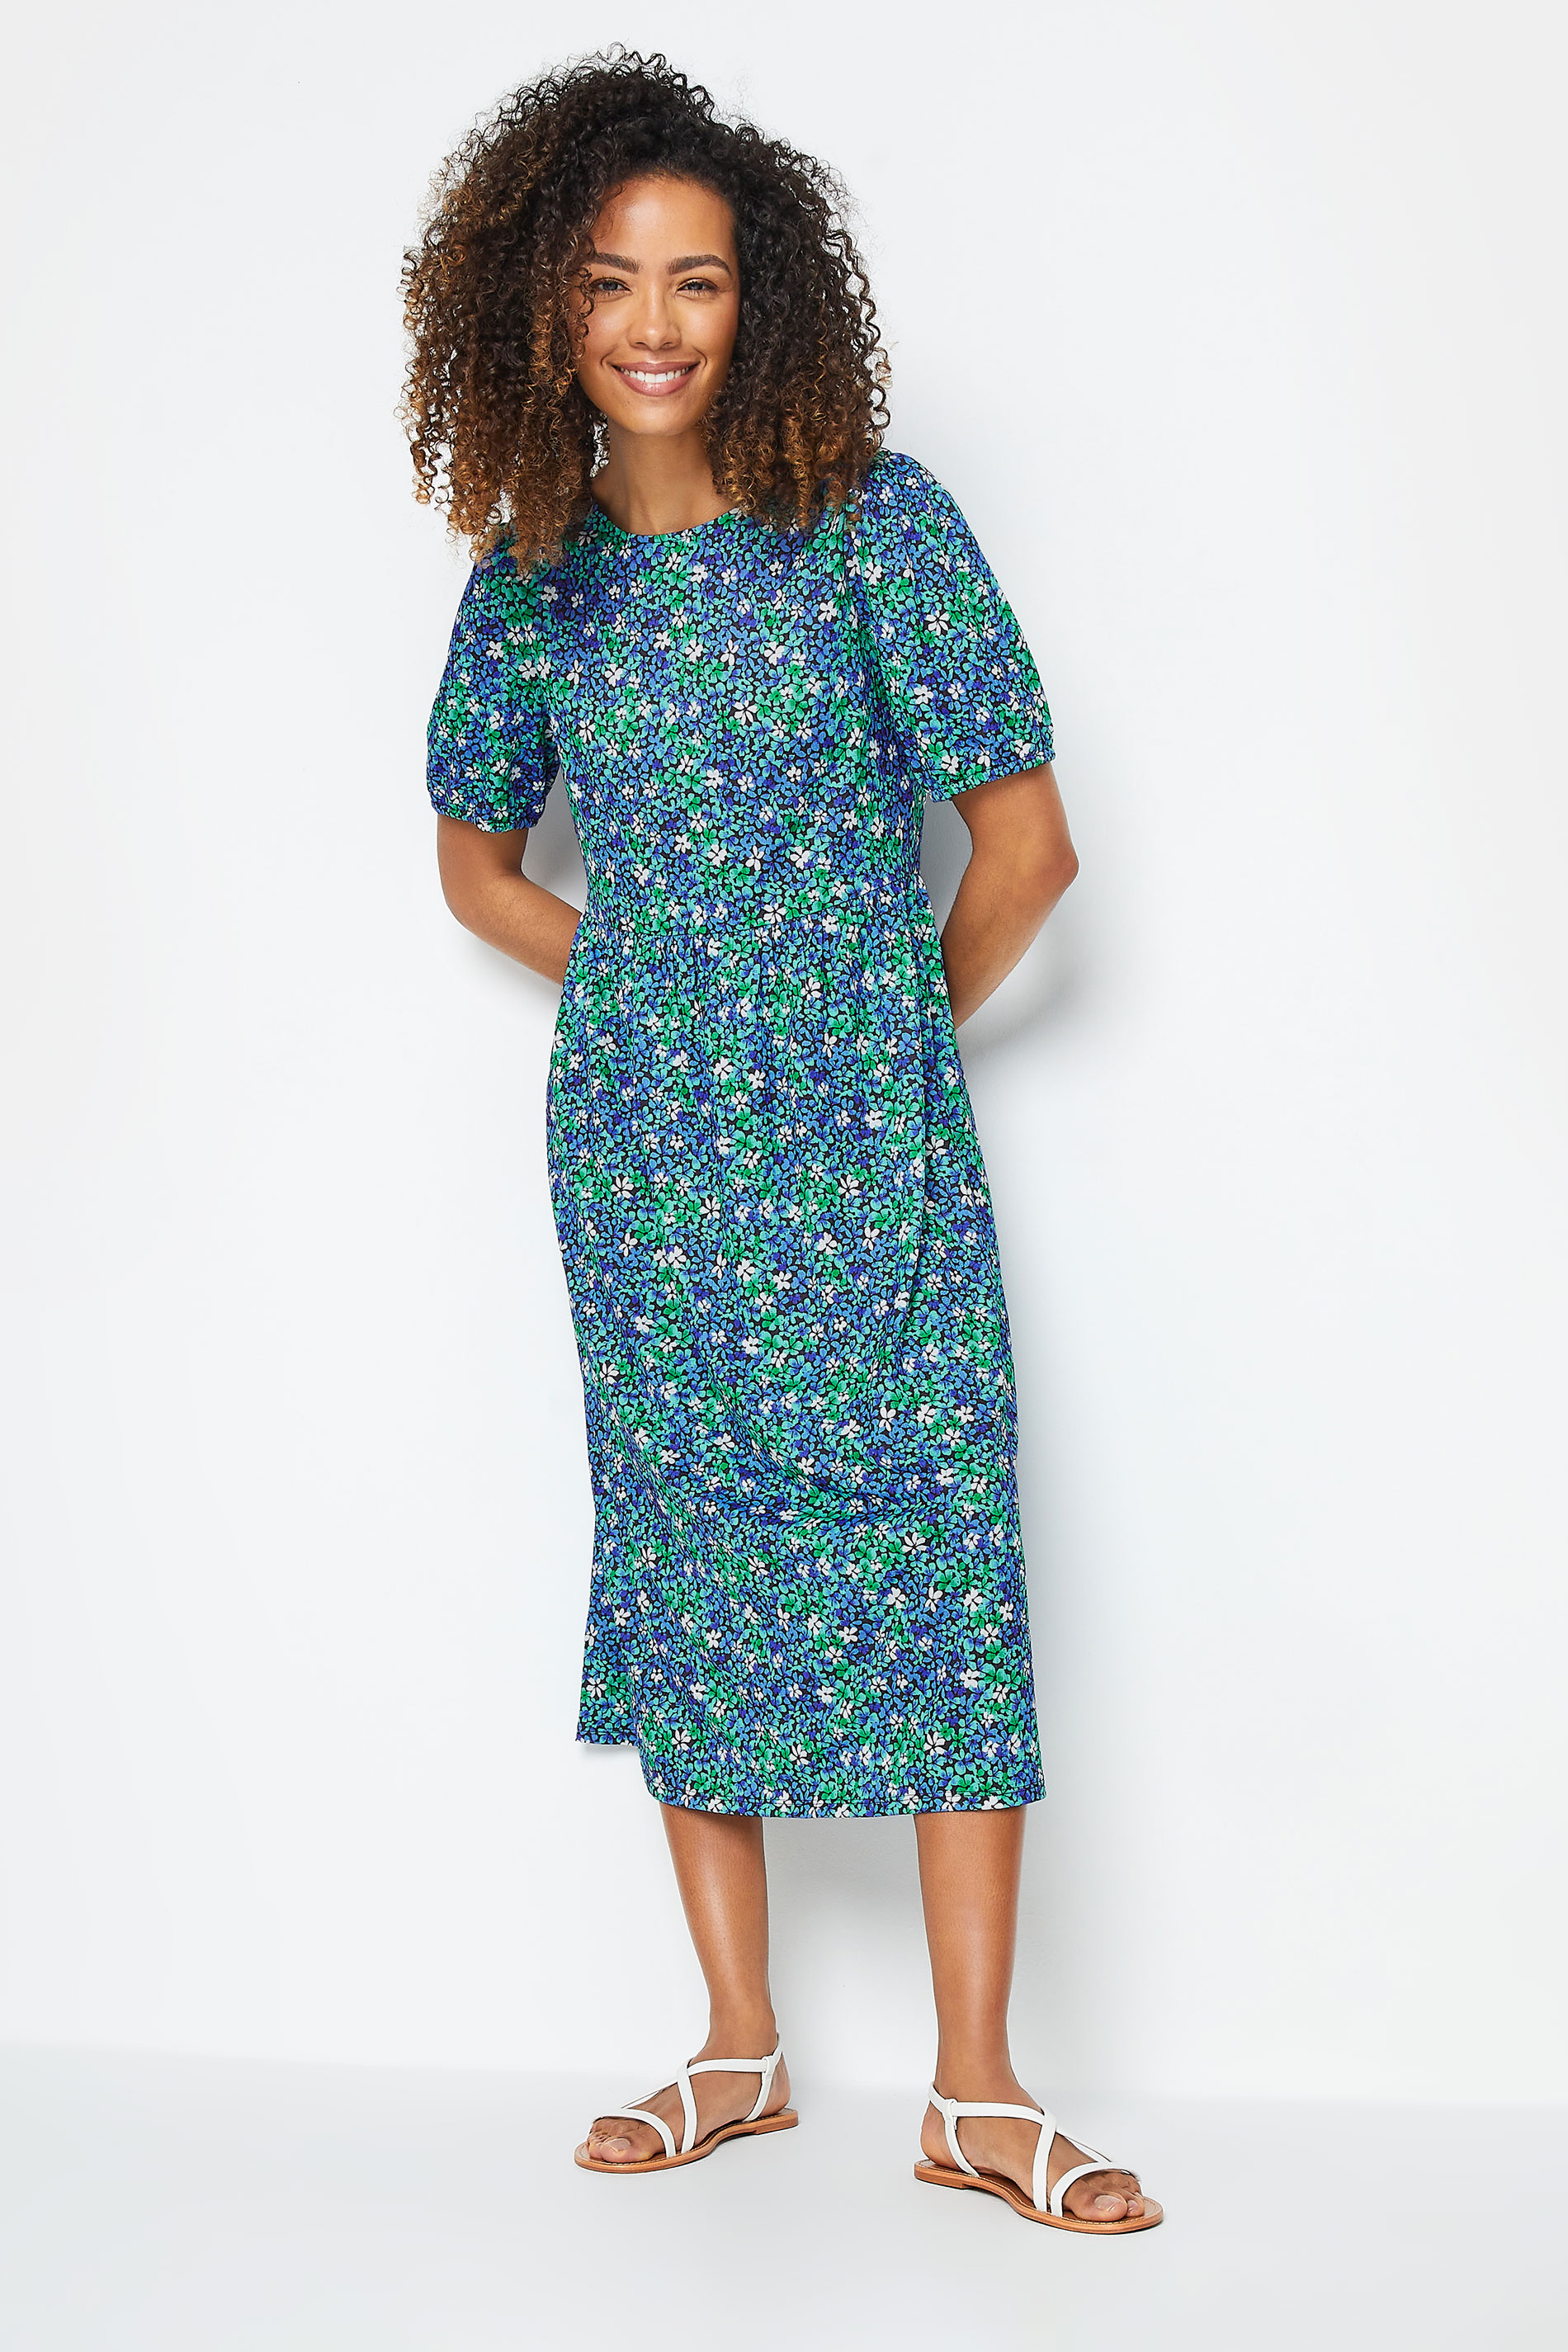 M&Co Blue Dity Floral Print Short Sleeve Smock Dress | M&Co 1